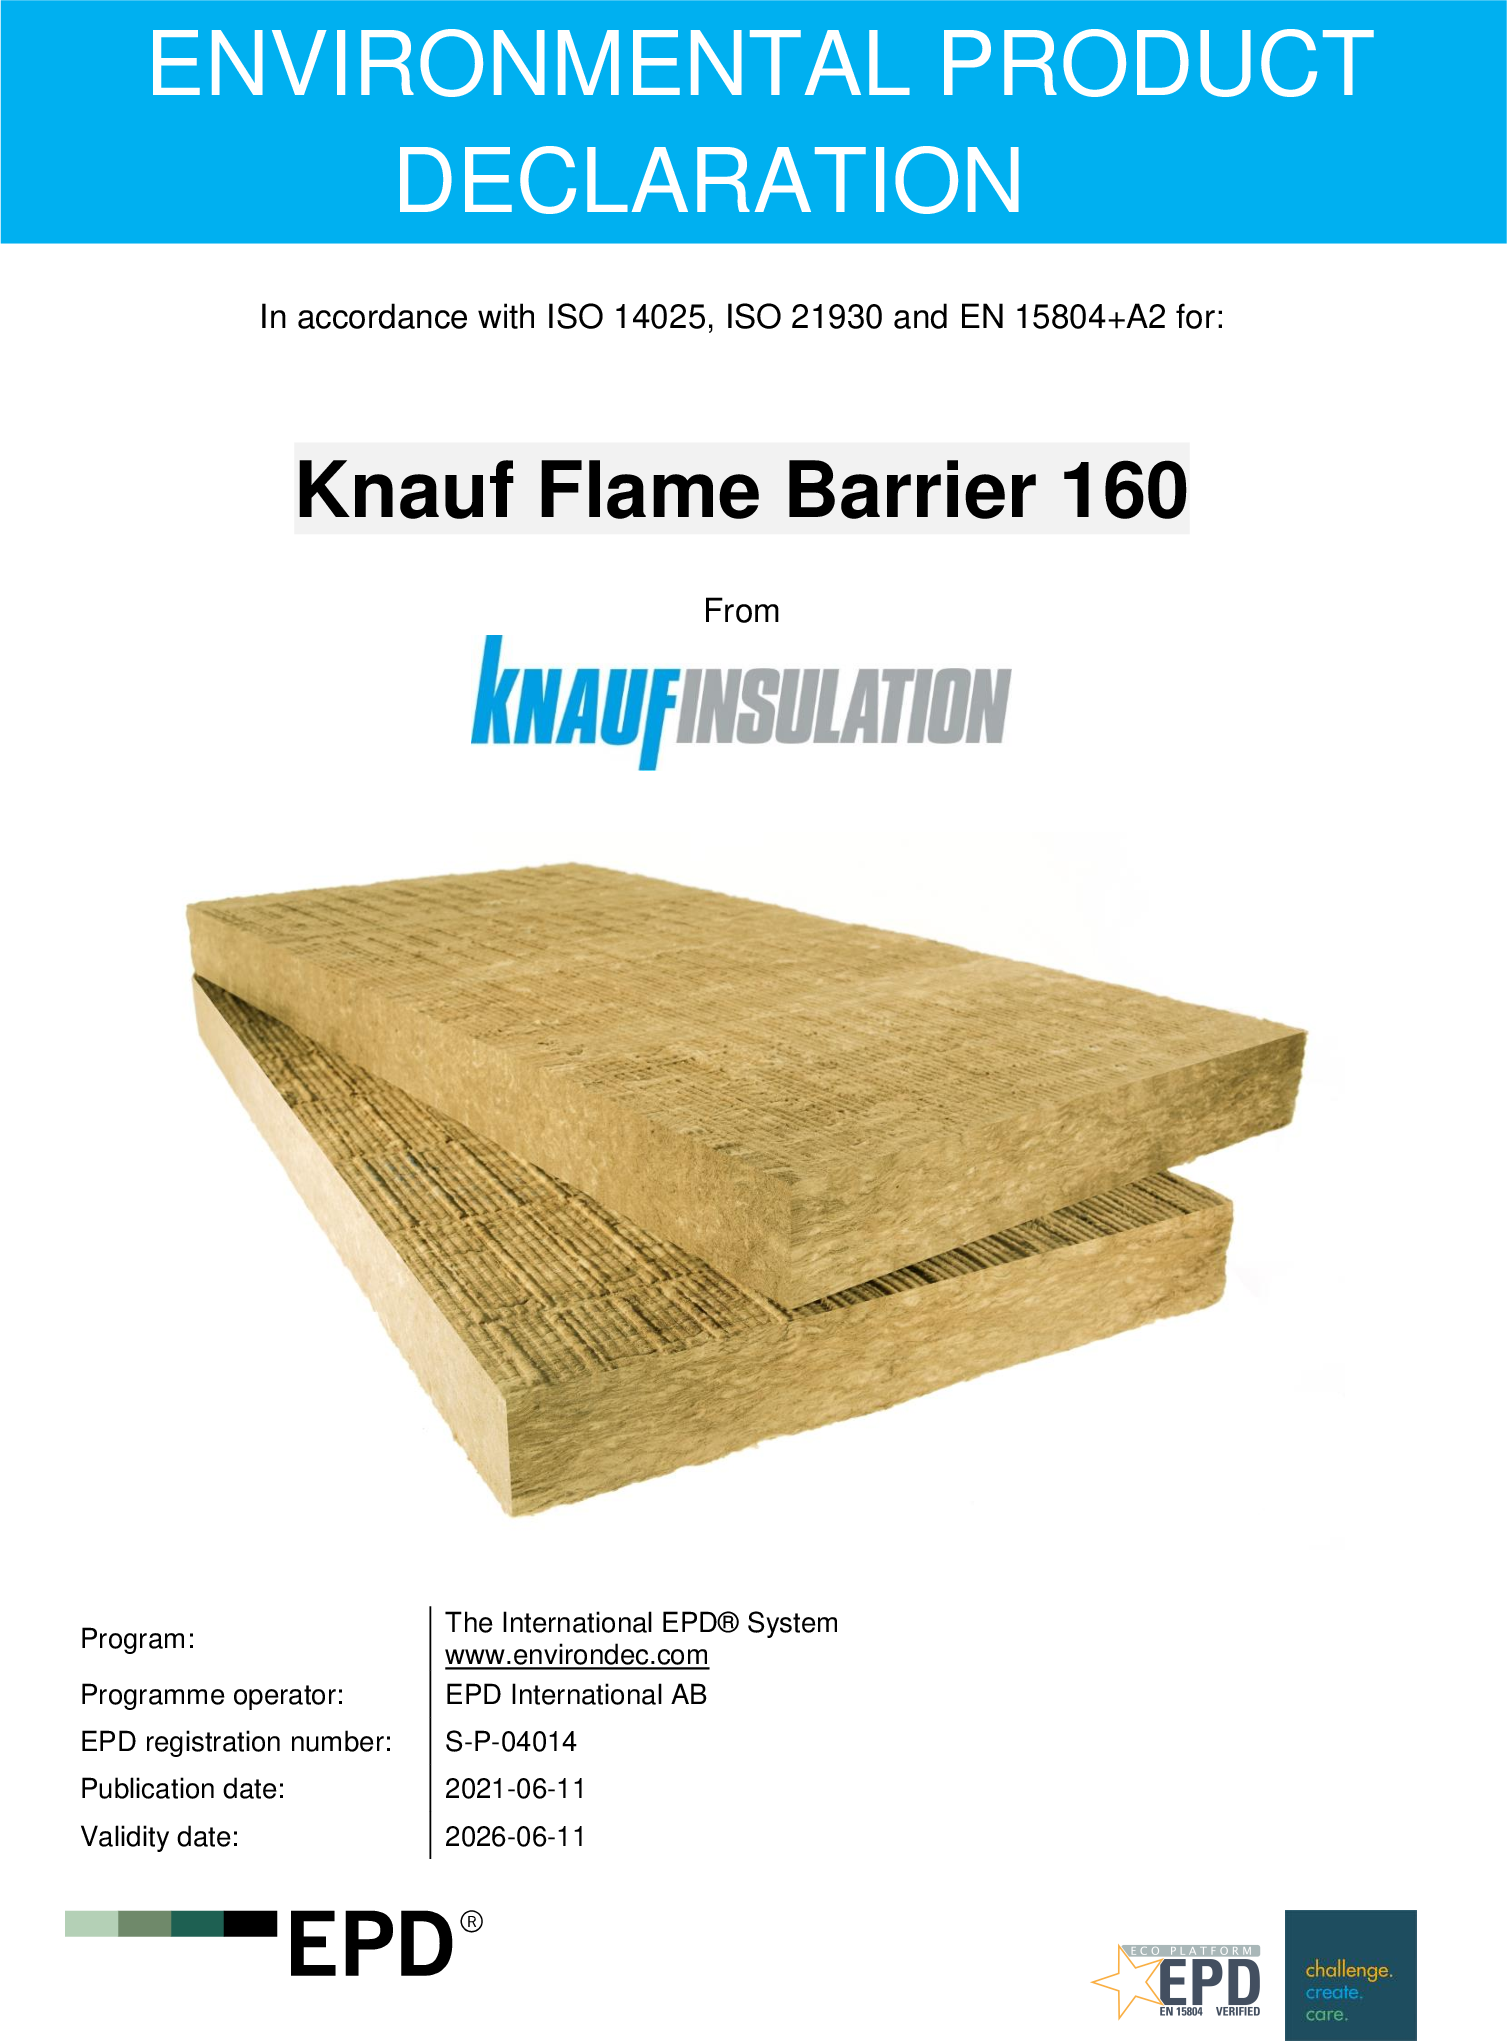 Knauf Flame Barrier 160